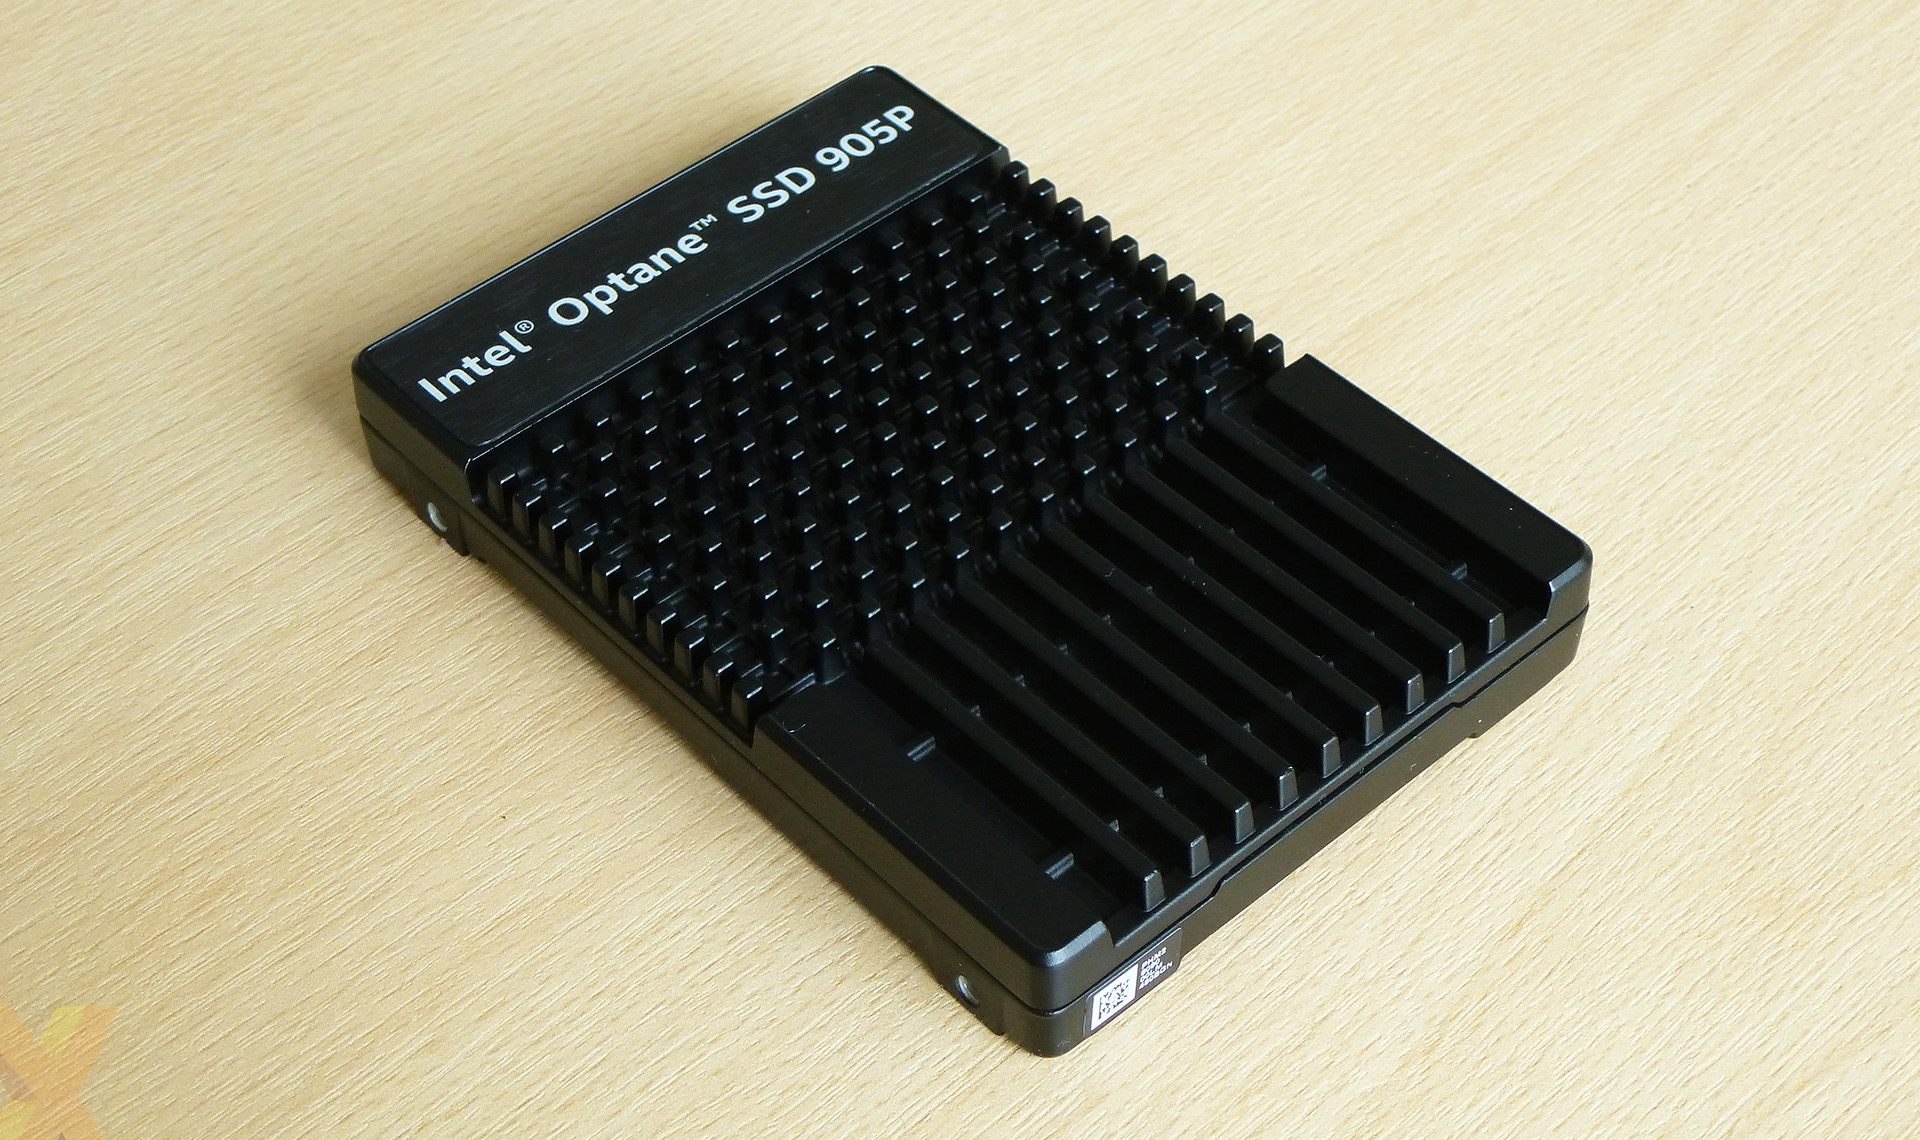 Review: Intel Optane SSD 905P Series (480GB) - Storage - HEXUS.net1920 x 1140